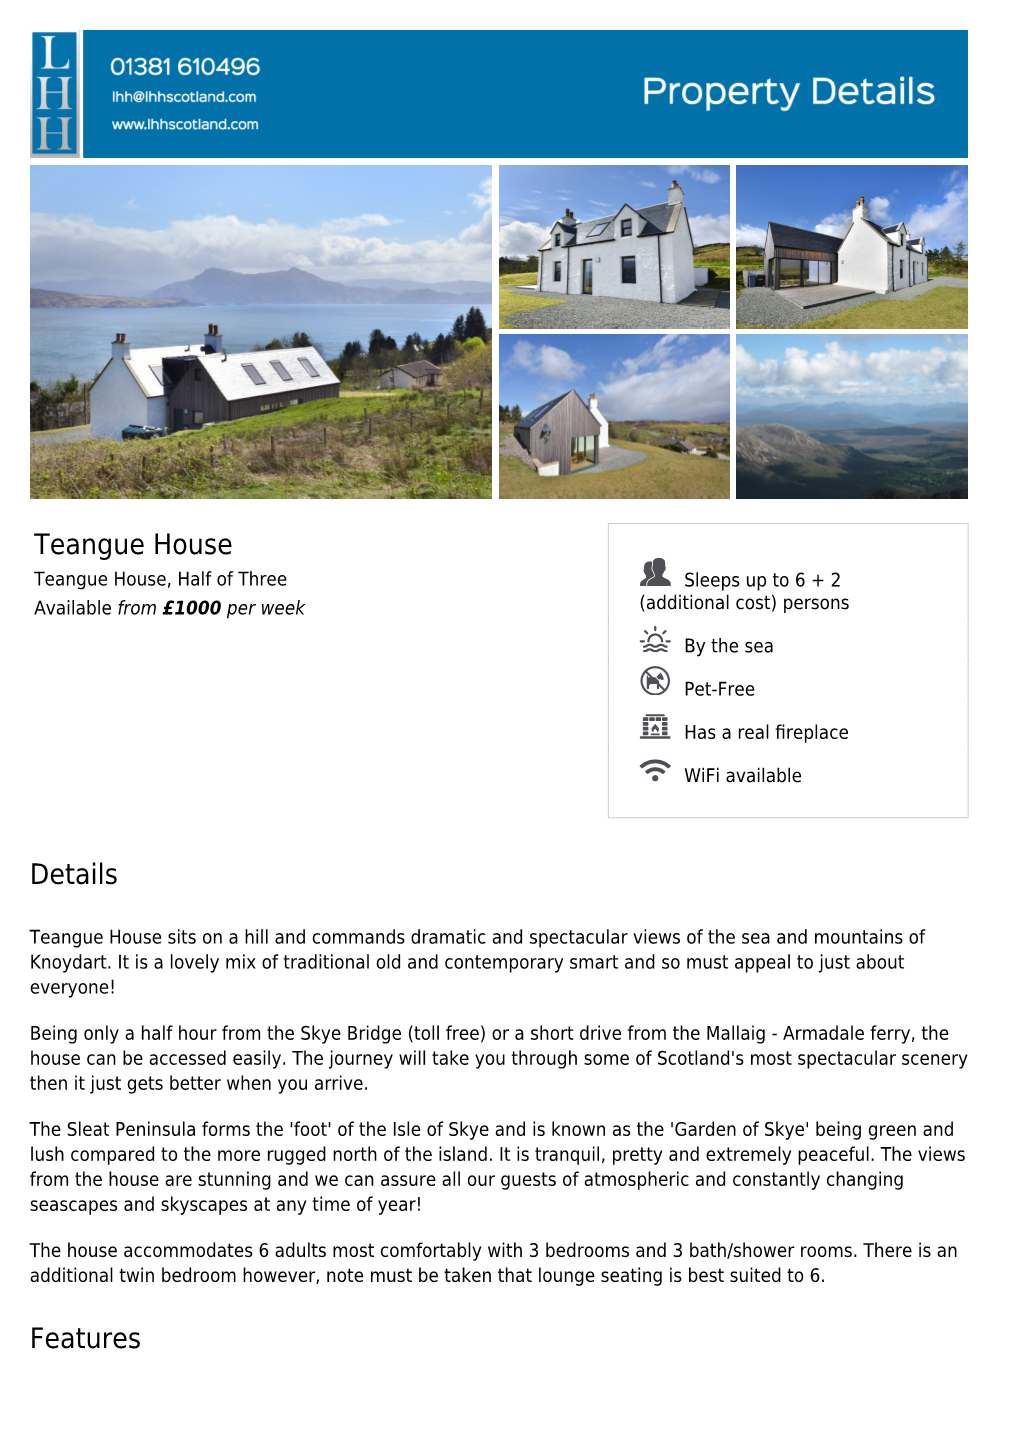 Teangue House Brochure